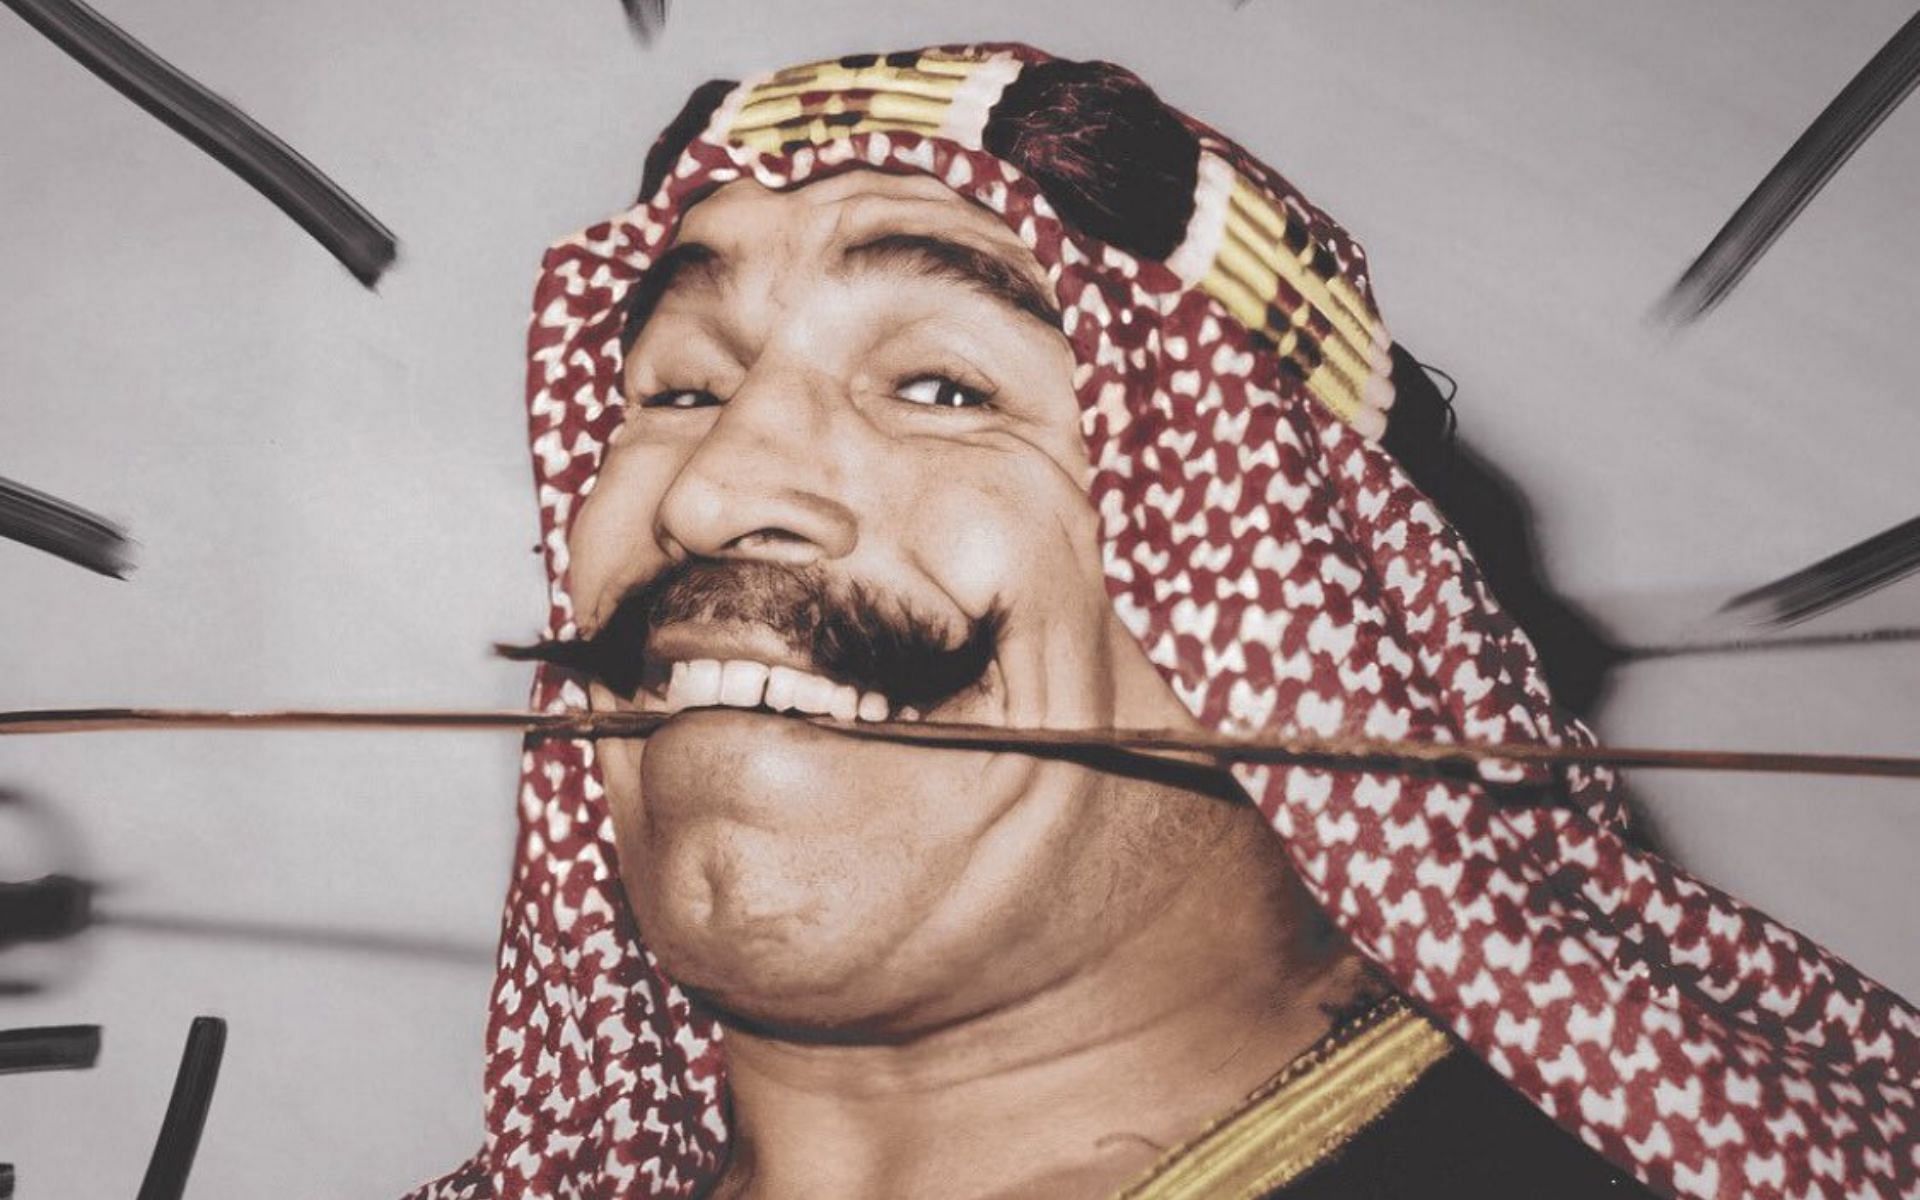 Iron Sheik (Image credit: @therealironsheik on Instagram)